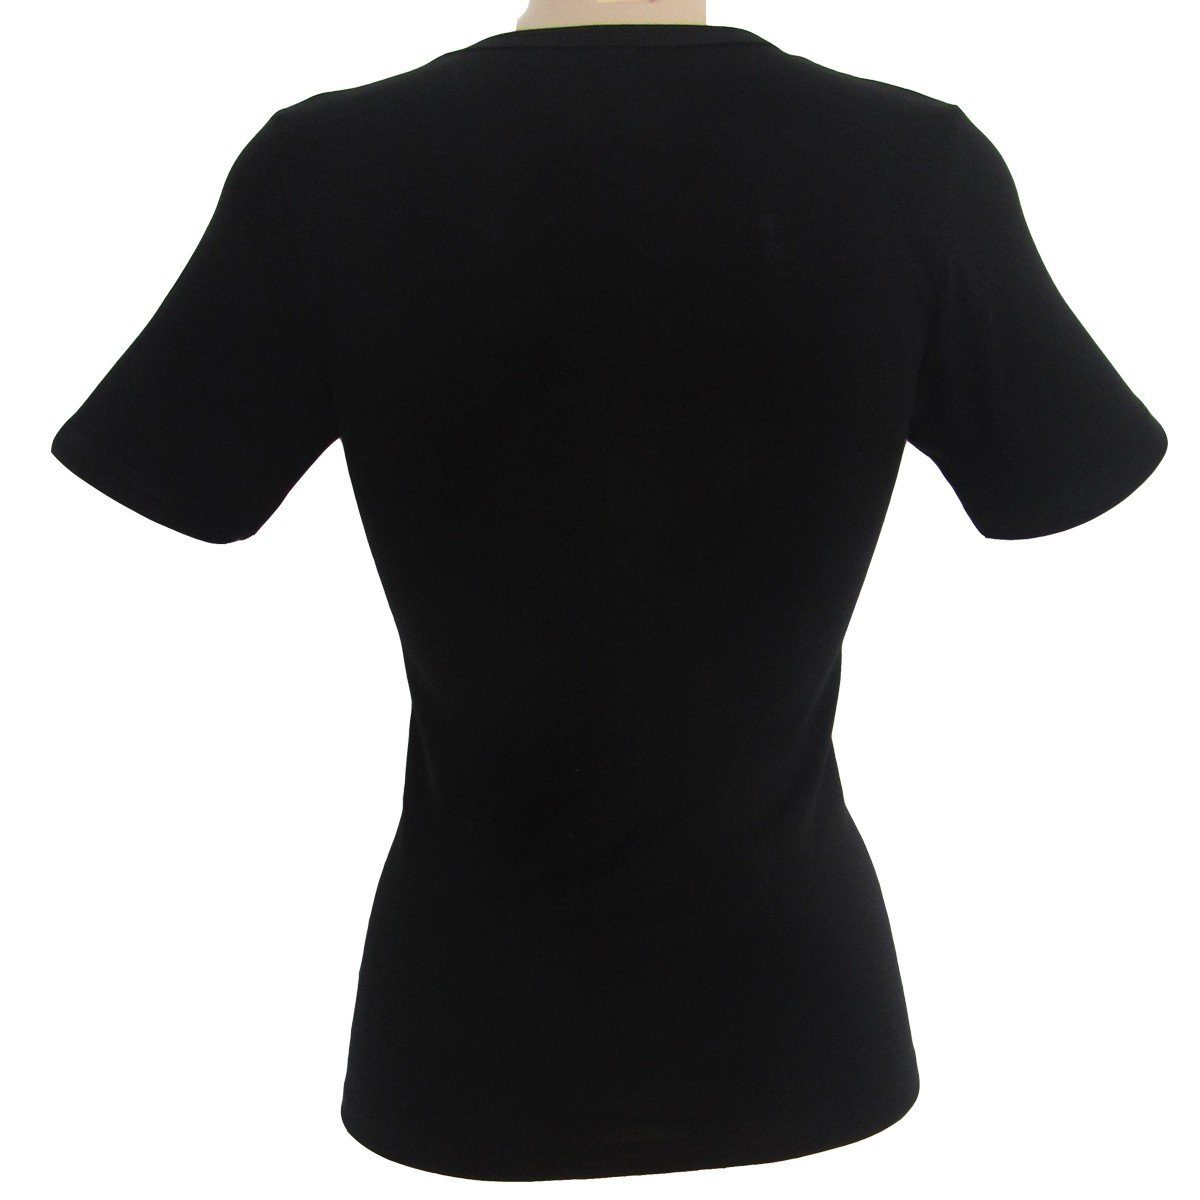 HERMKO 17815 Baumwolle Damen aus Ausschnitt mit / Unterziehshirt schwarz eckigem Modal kurzarm Shirt